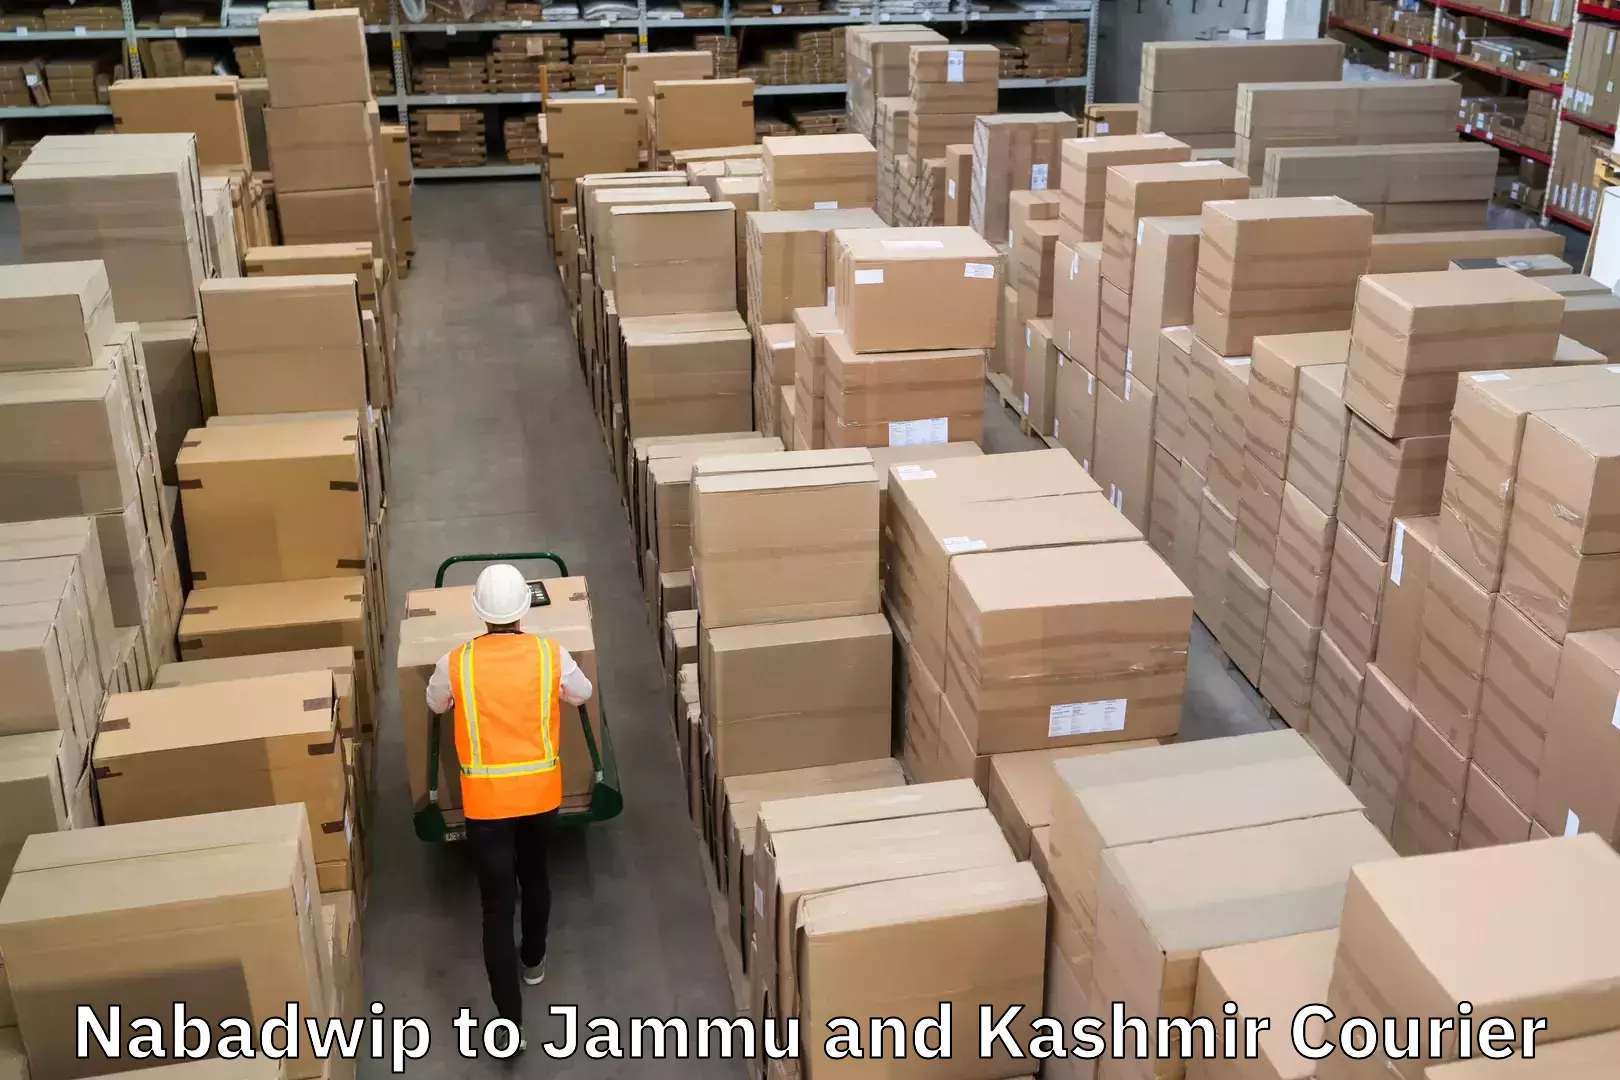 Digital courier platforms Nabadwip to Jammu and Kashmir